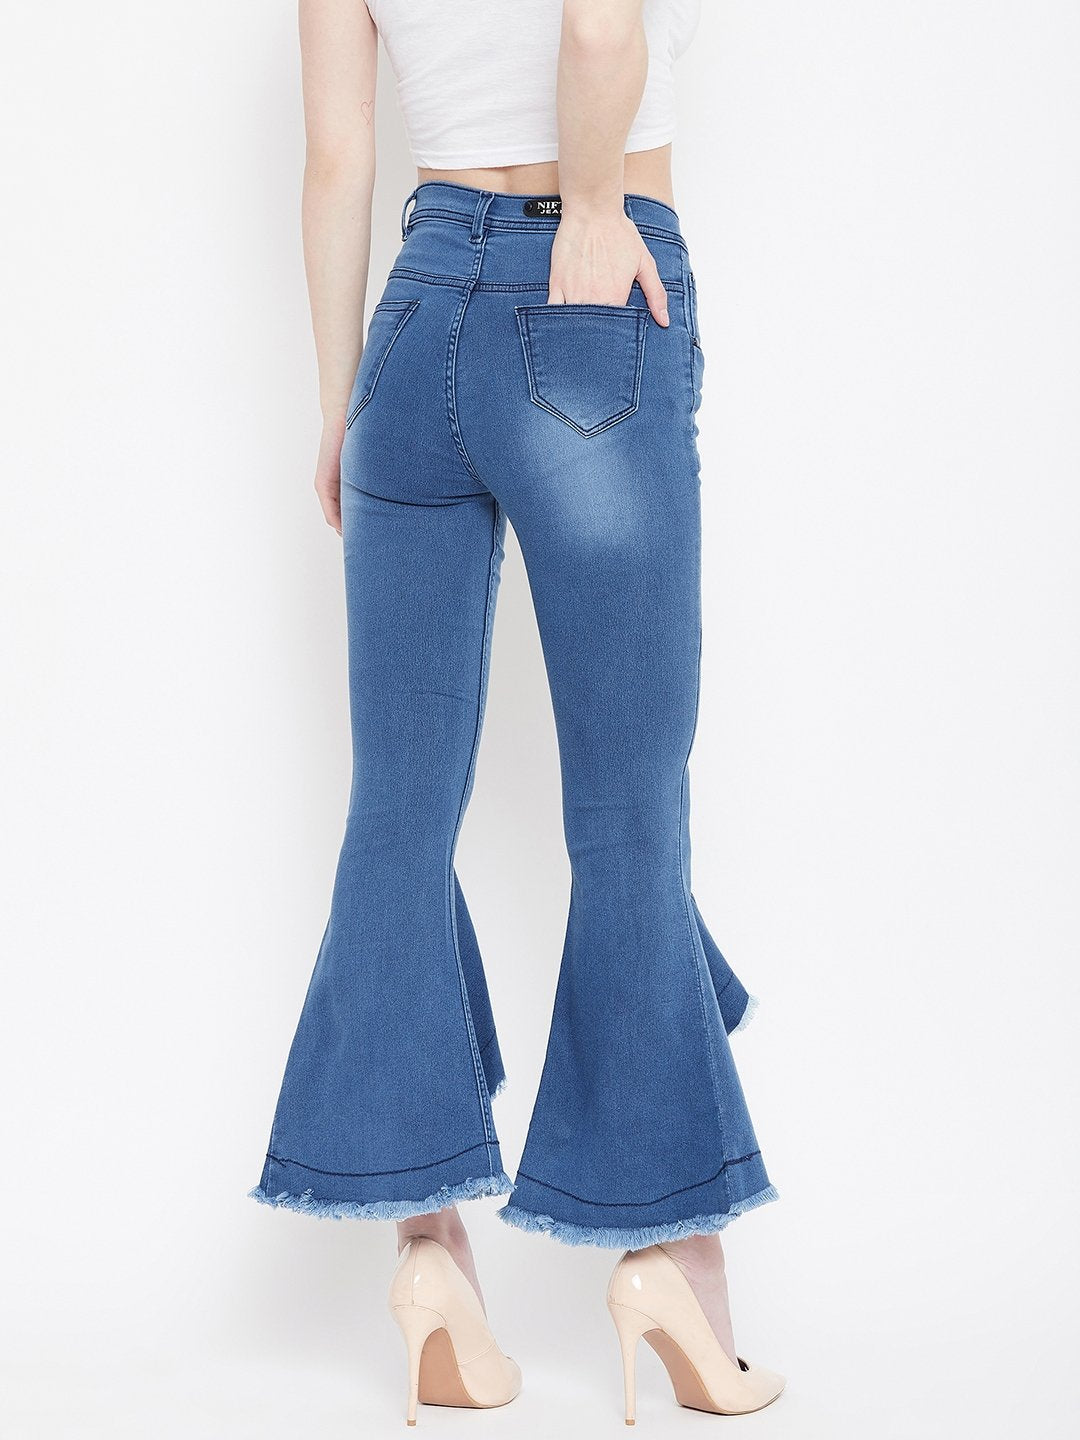 High Waist Flared Bata Blue Jeans - NiftyJeans